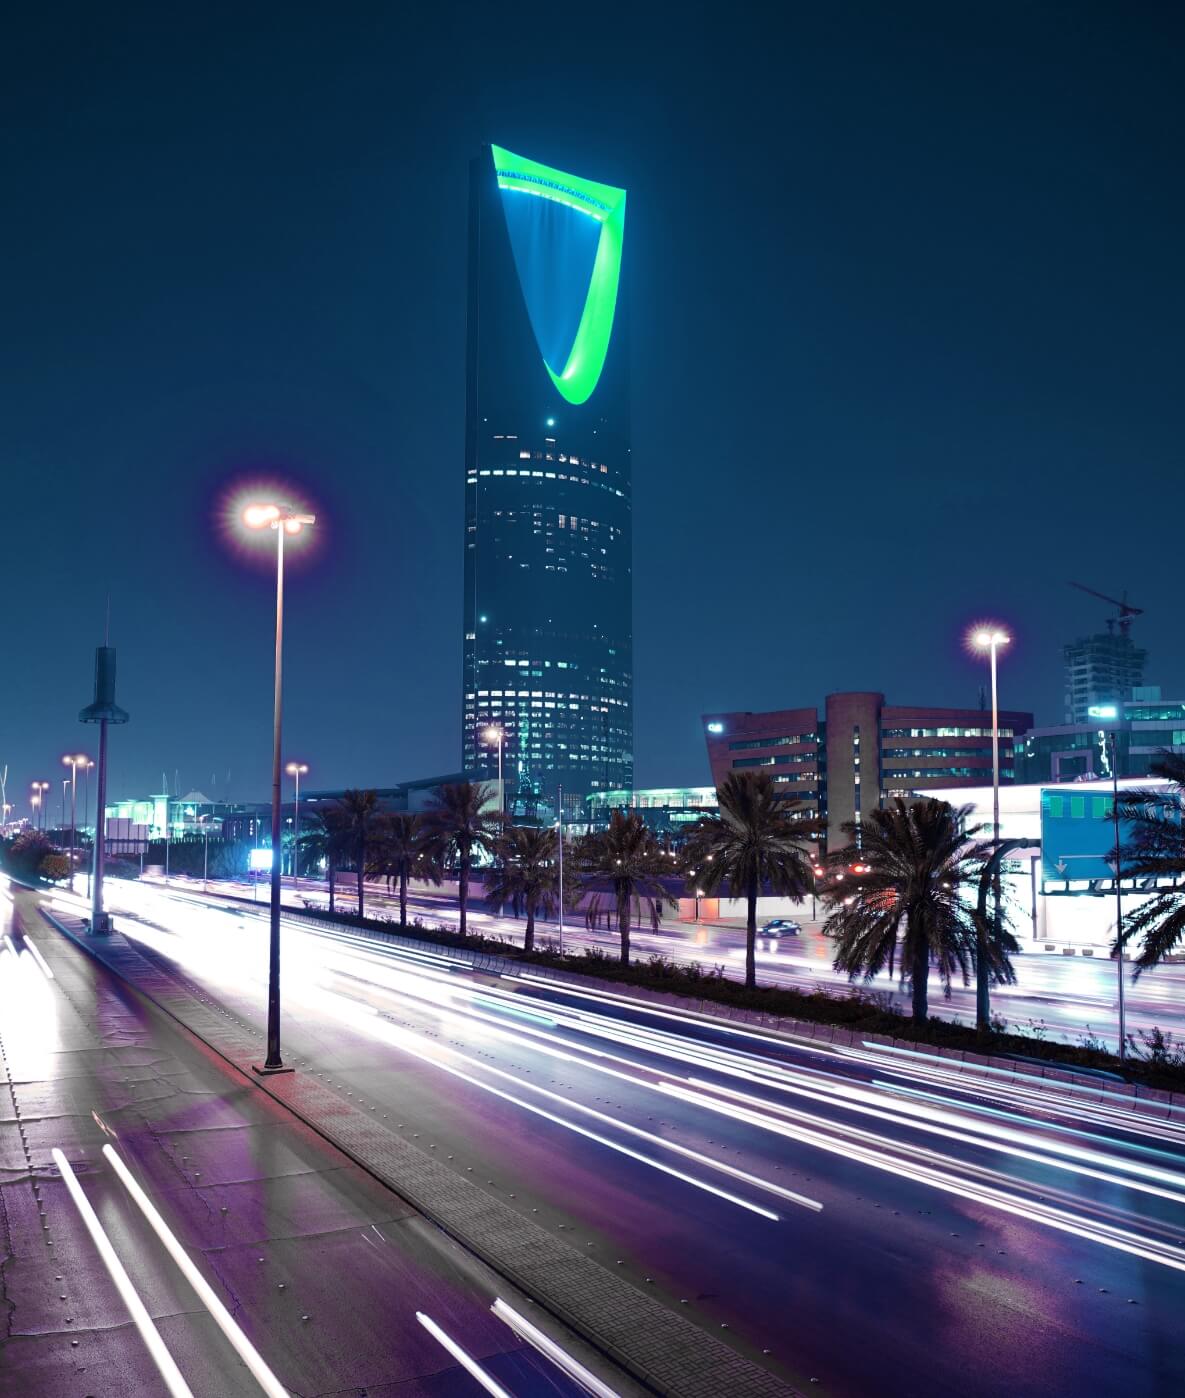 Riyadh Tower